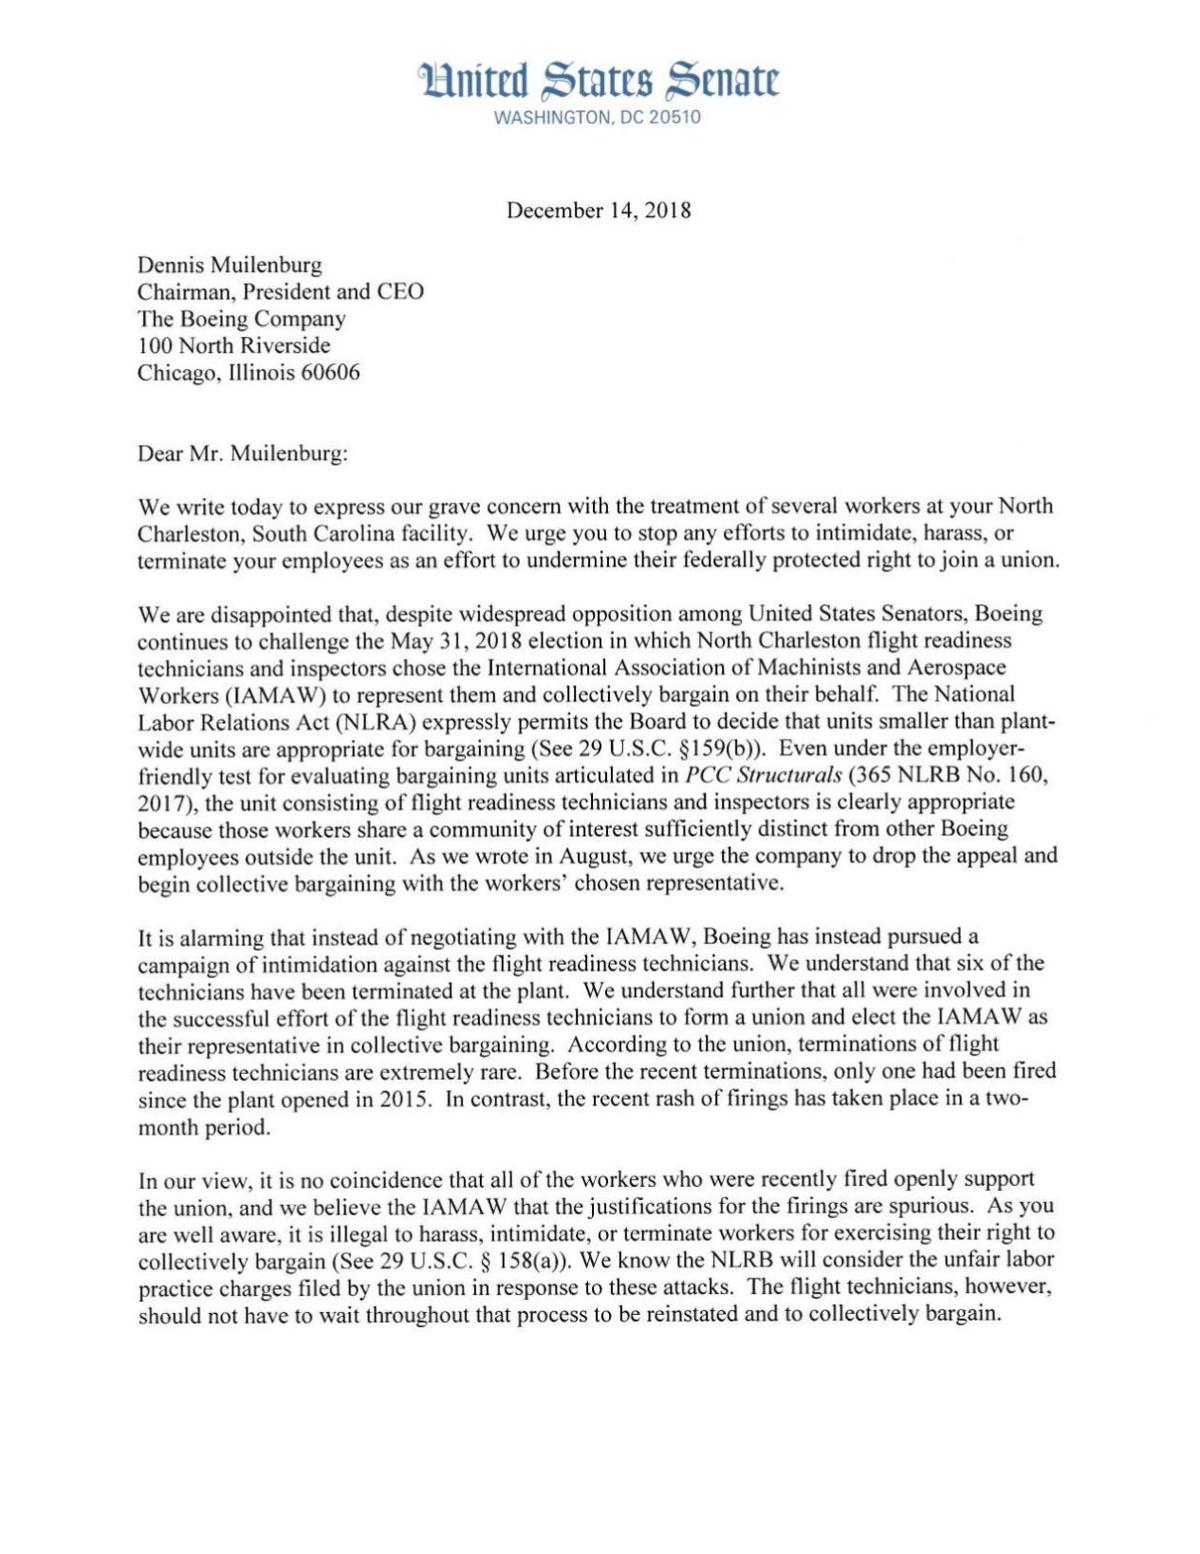 Sens. Brown and Sanders letter to Boeing's Muilenburg